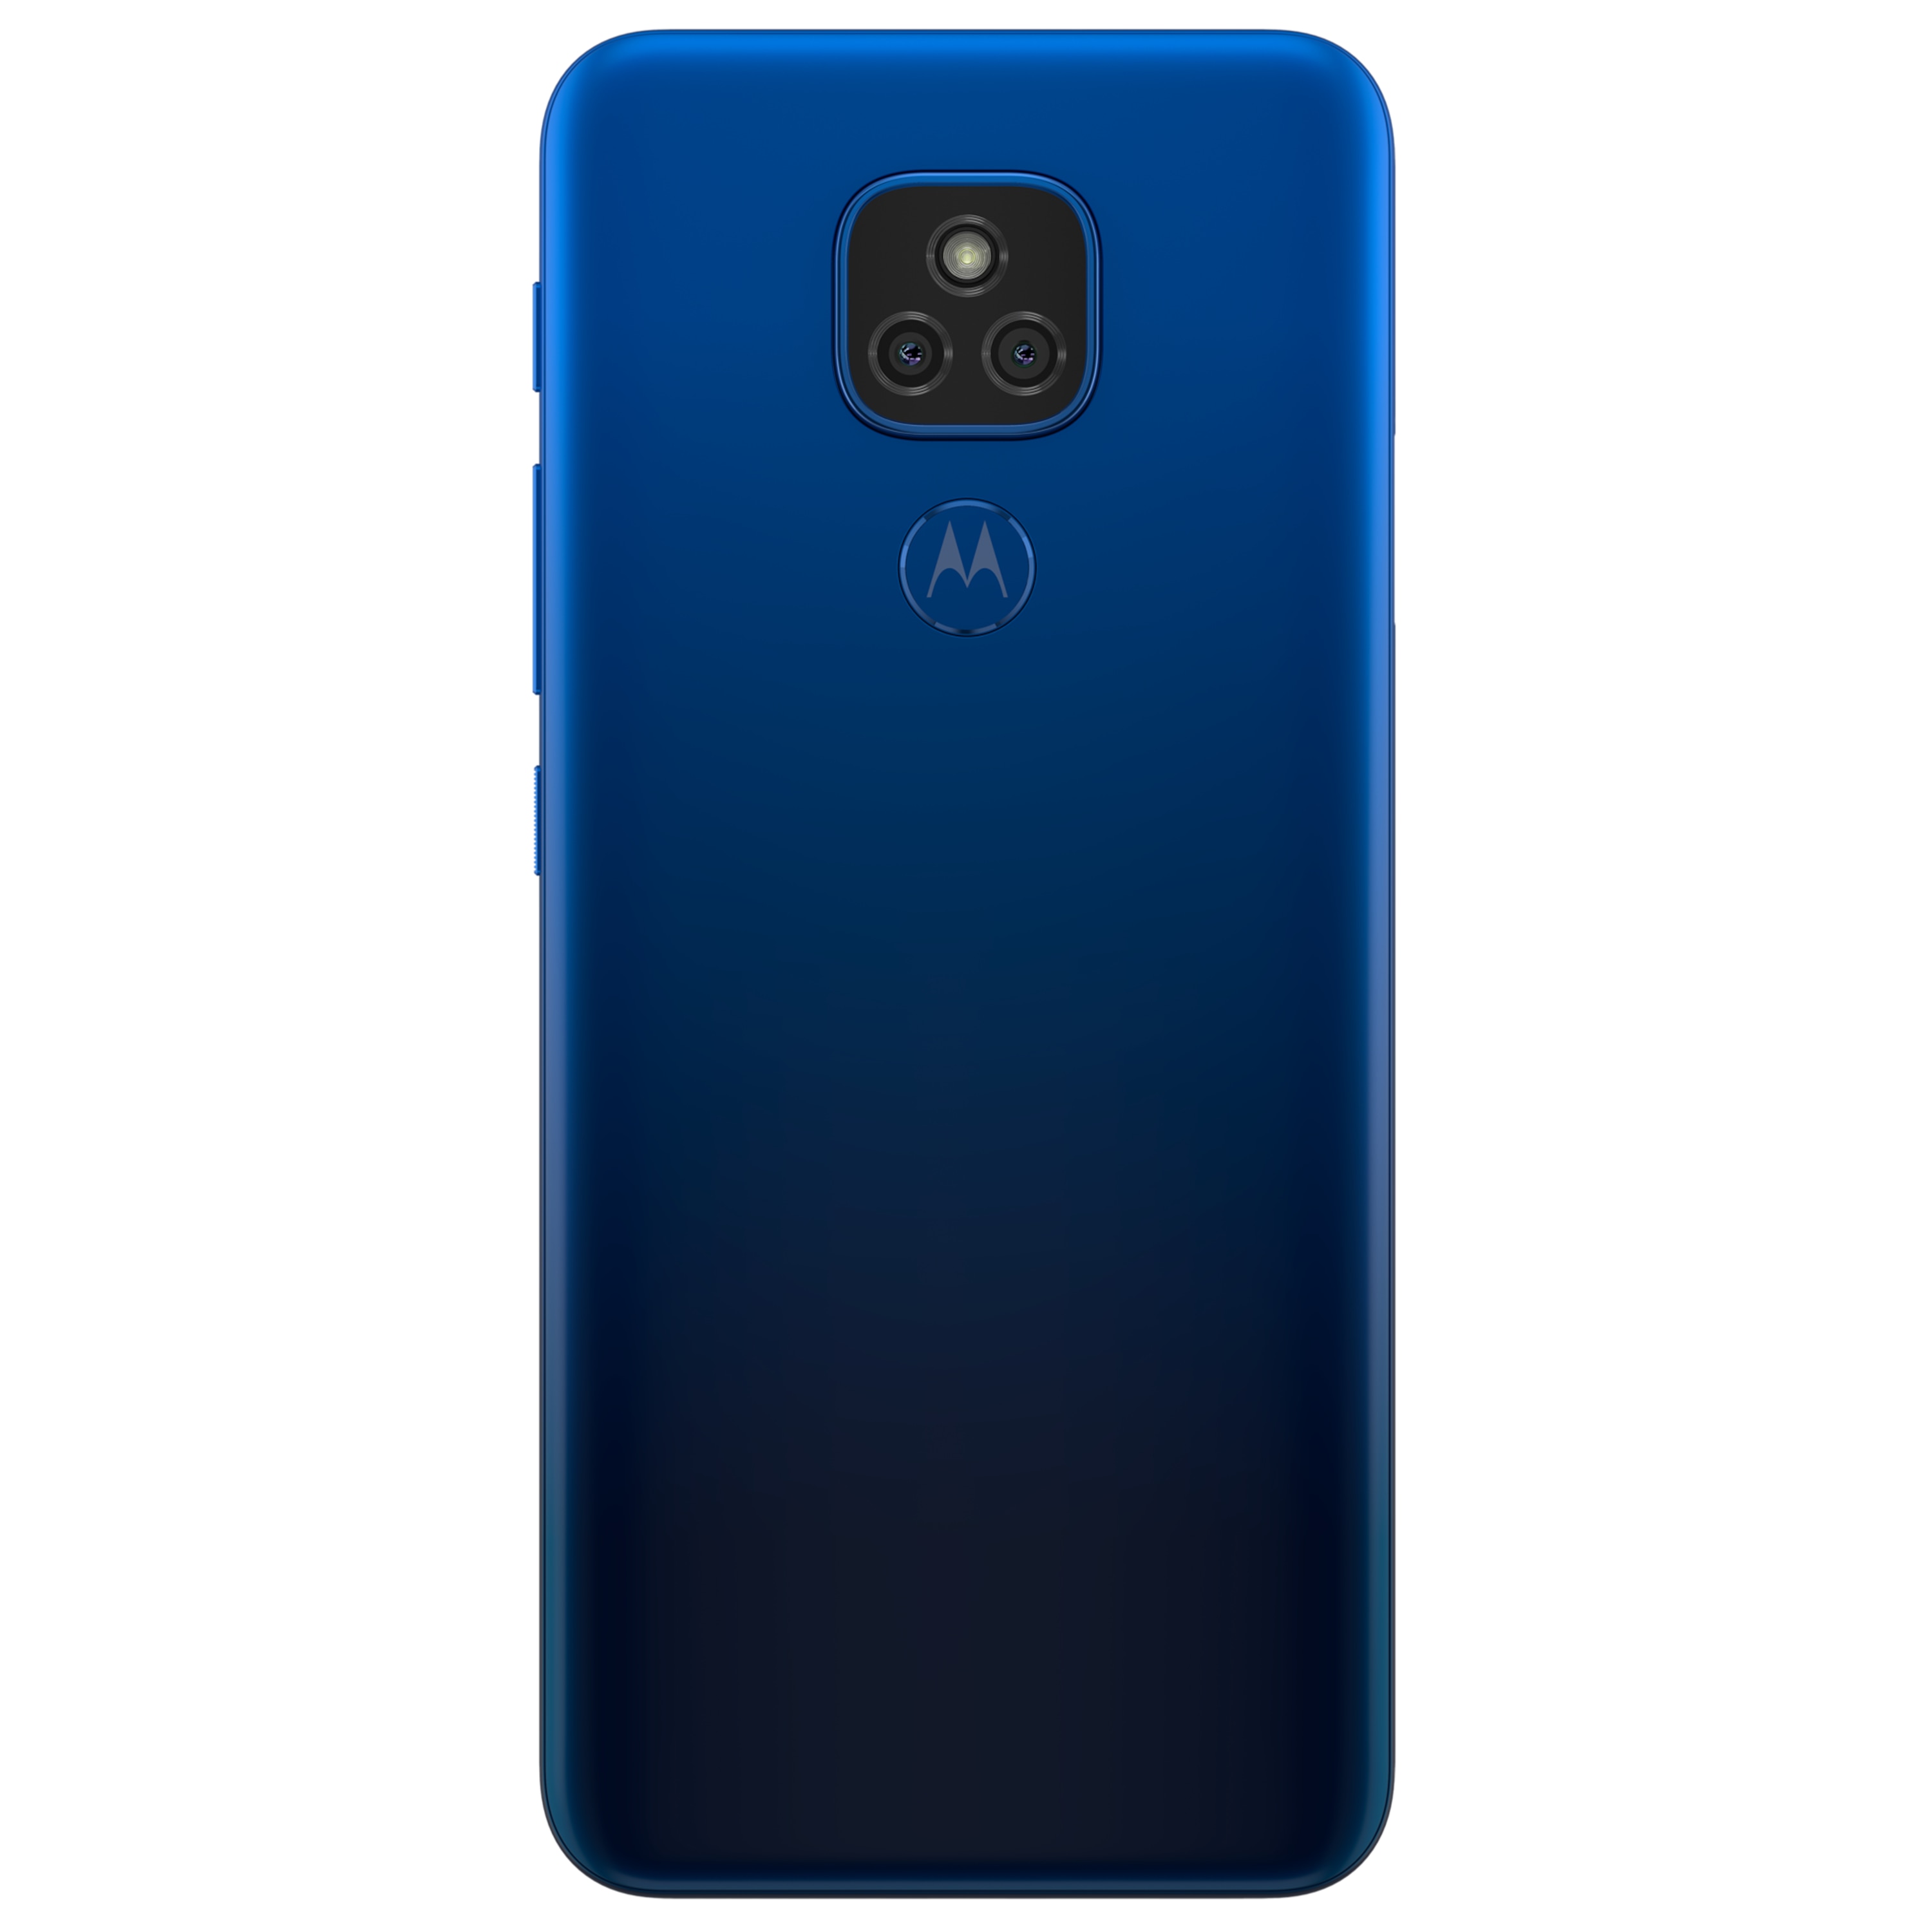 MOTOROLA moto e7 plus Smartphone, 16,5 cm (6,5") LTPS Display, Betriebssystem Android™ 10, 64 GB interner Speicher, 4 GB RAM, Octa-Core Prozessor, Bluetooth® 5.0, Farbe: Blau